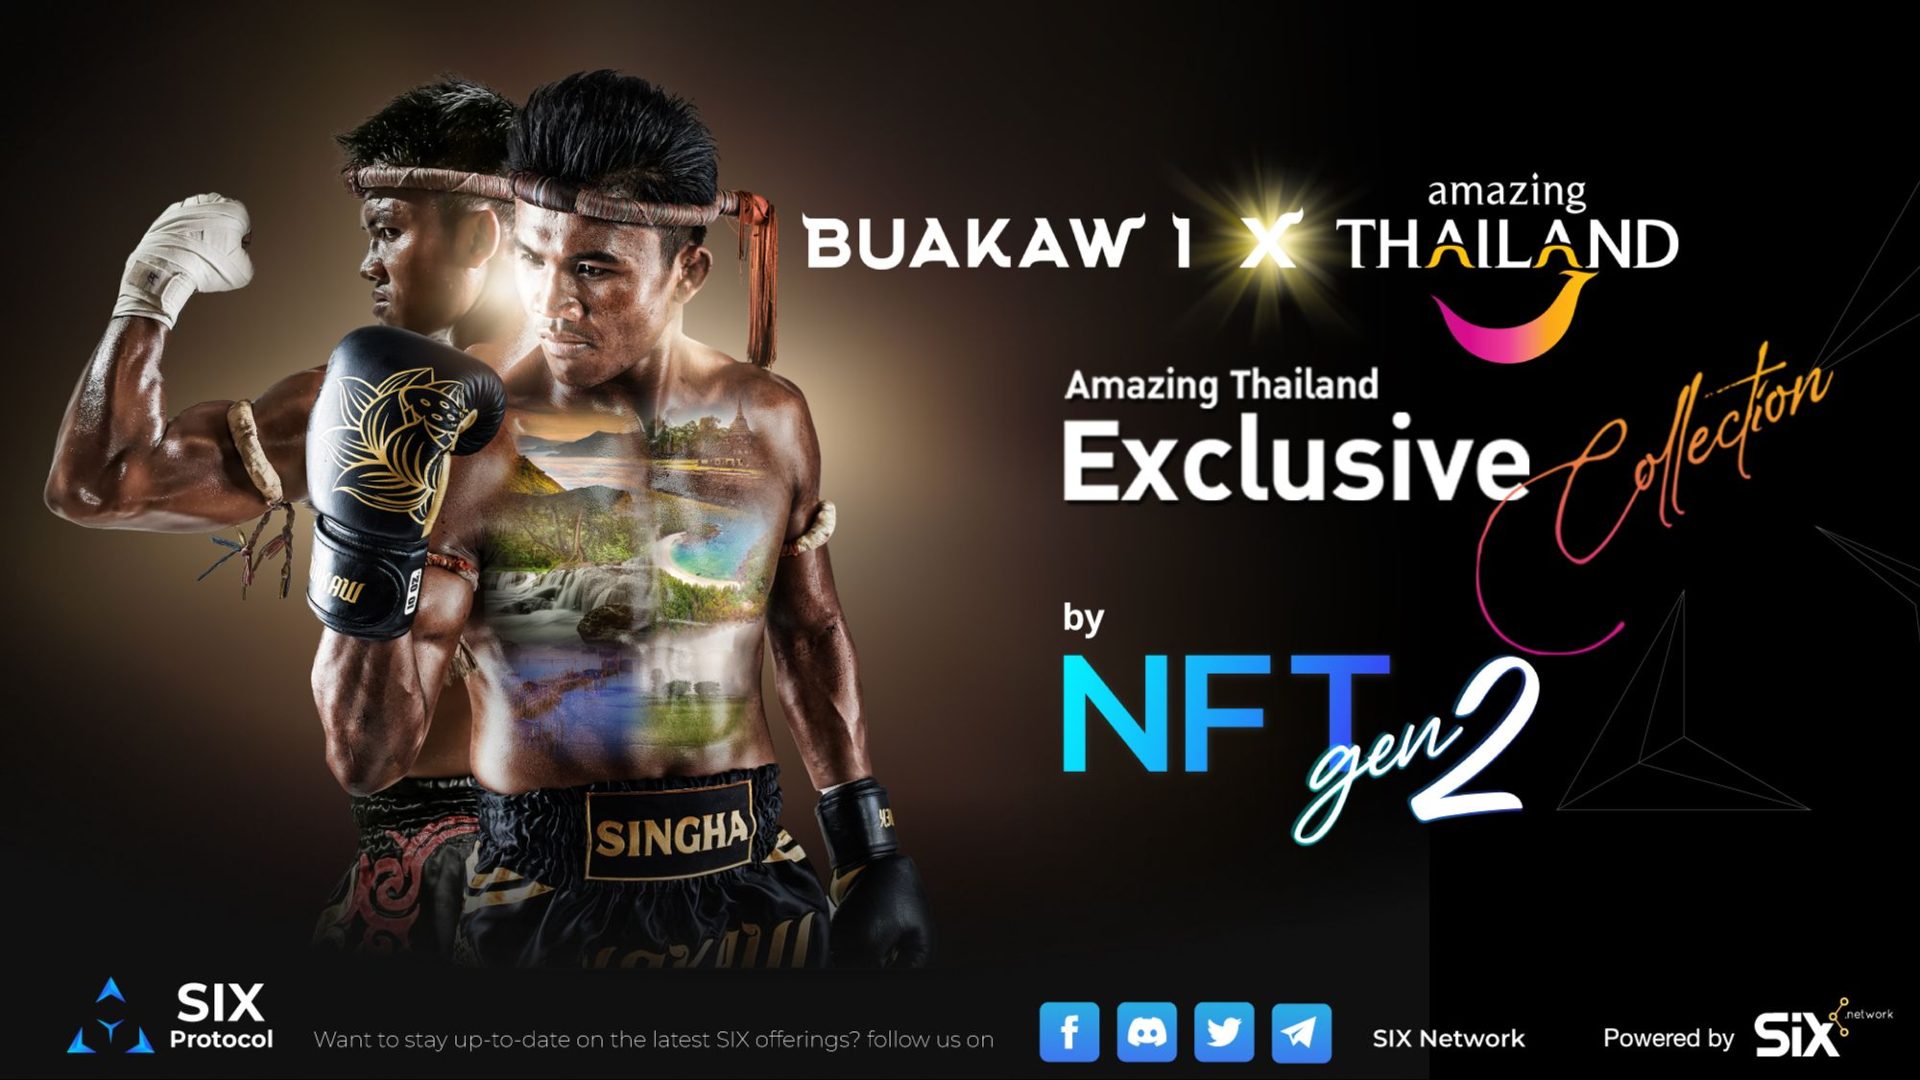 NFT Buakaw1 x Amazing Thailand เป็น NFT Exclusive Collection จากความร่วมมือกันระหว่าง บัวขาว บัญชาเมฆ และ การท่องเที่ยวแห่งประเทศไทย (ททท.) เพื่อต่อยอดมวยไทยสู่การท่องเที่ยว